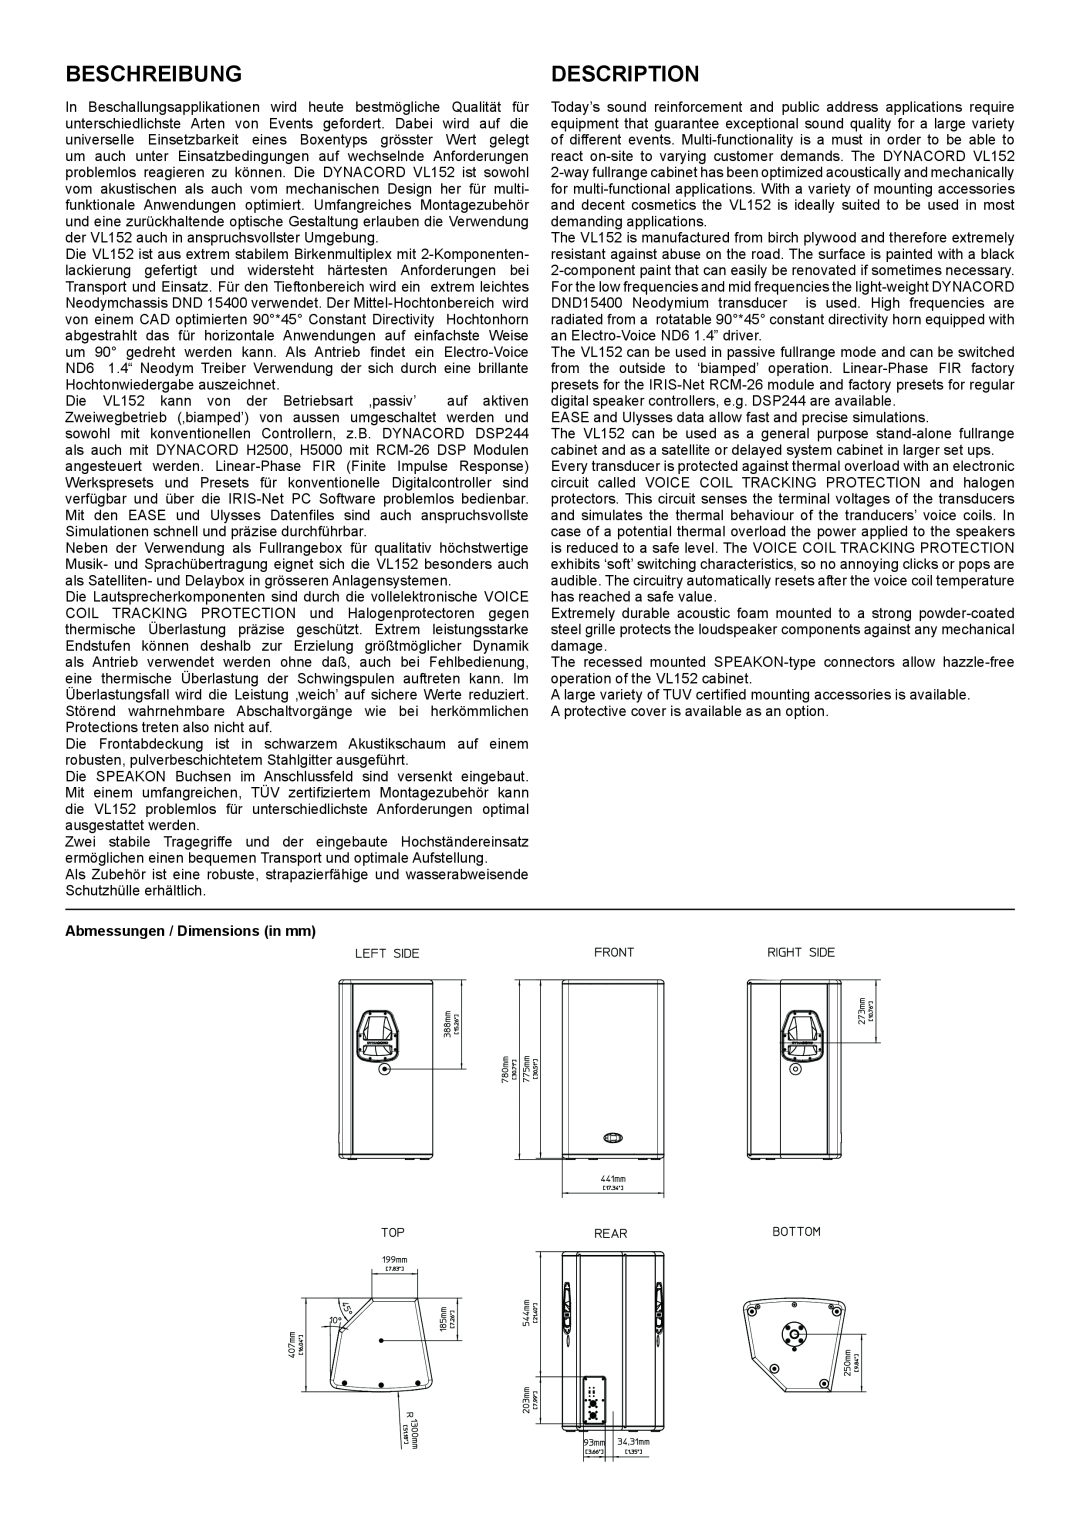 Dynacord VL 152 specifications Beschreibung, Description, Abmessungen / Dimensions in mm 